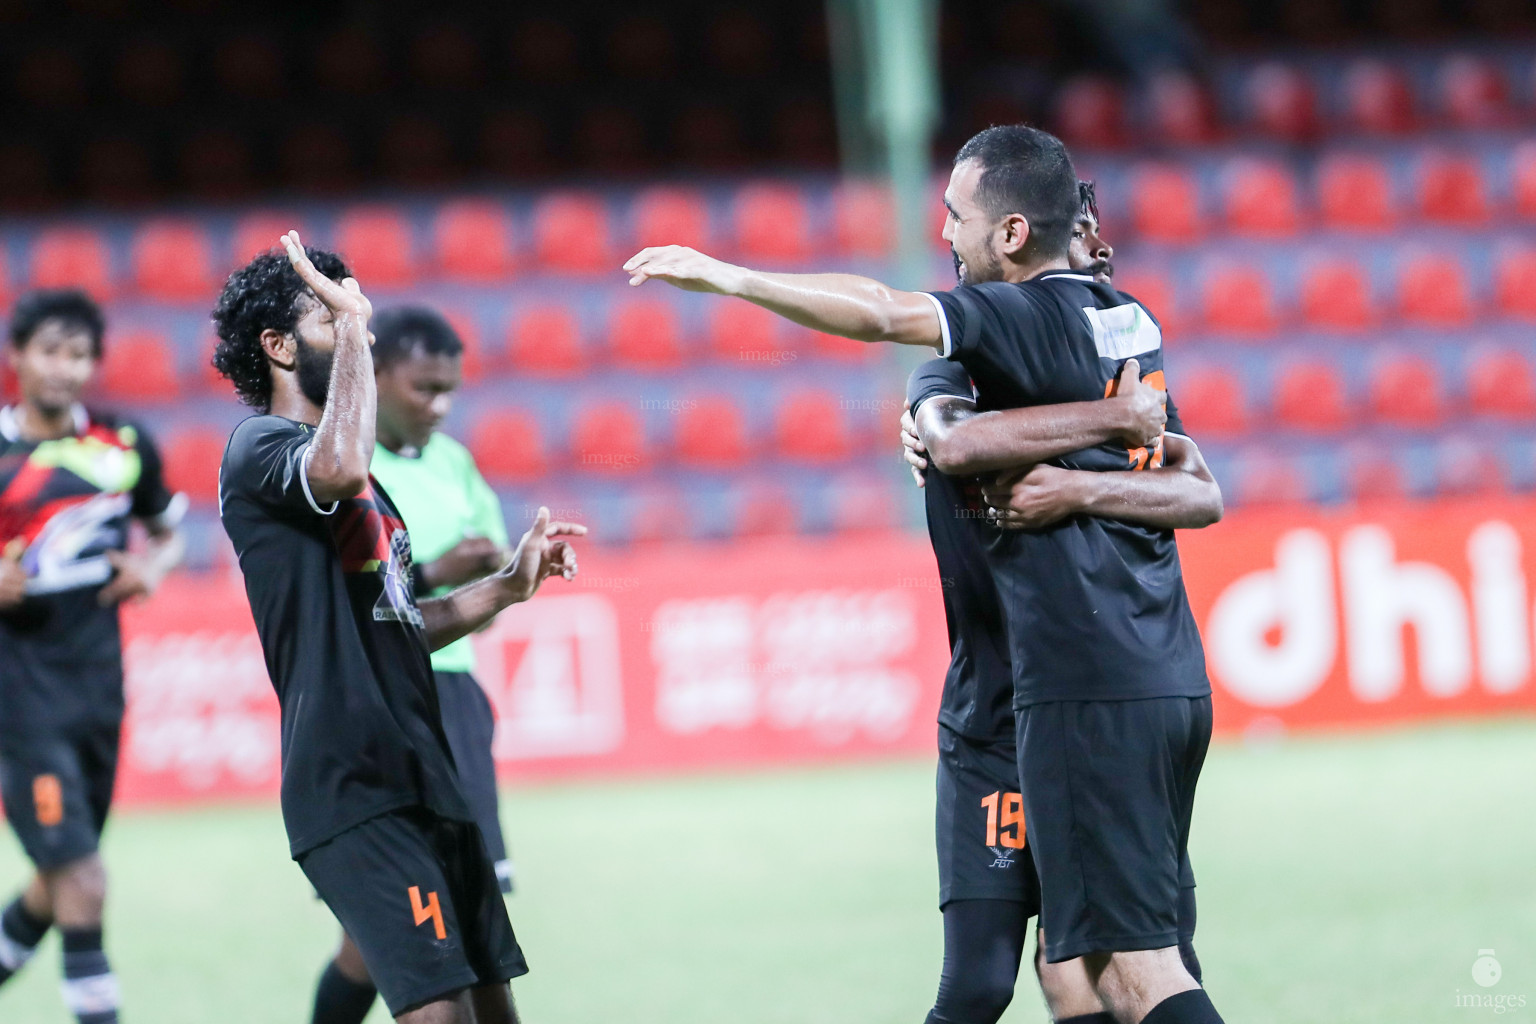 Dhiraagu Dhivehi Premier League 2018: Club Eagles vs Nilandhoo